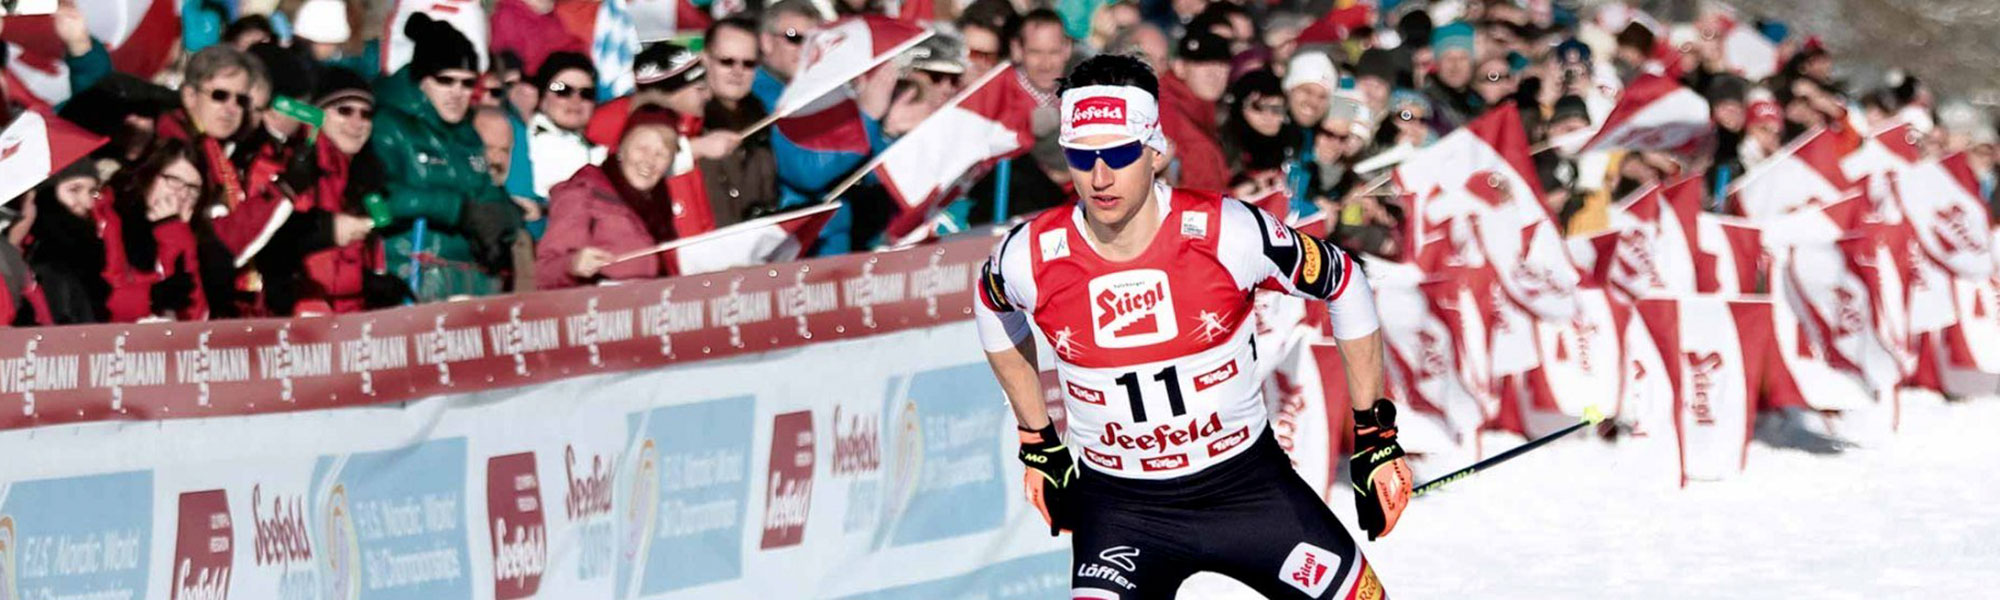 Nordic Ski World Cup 2019